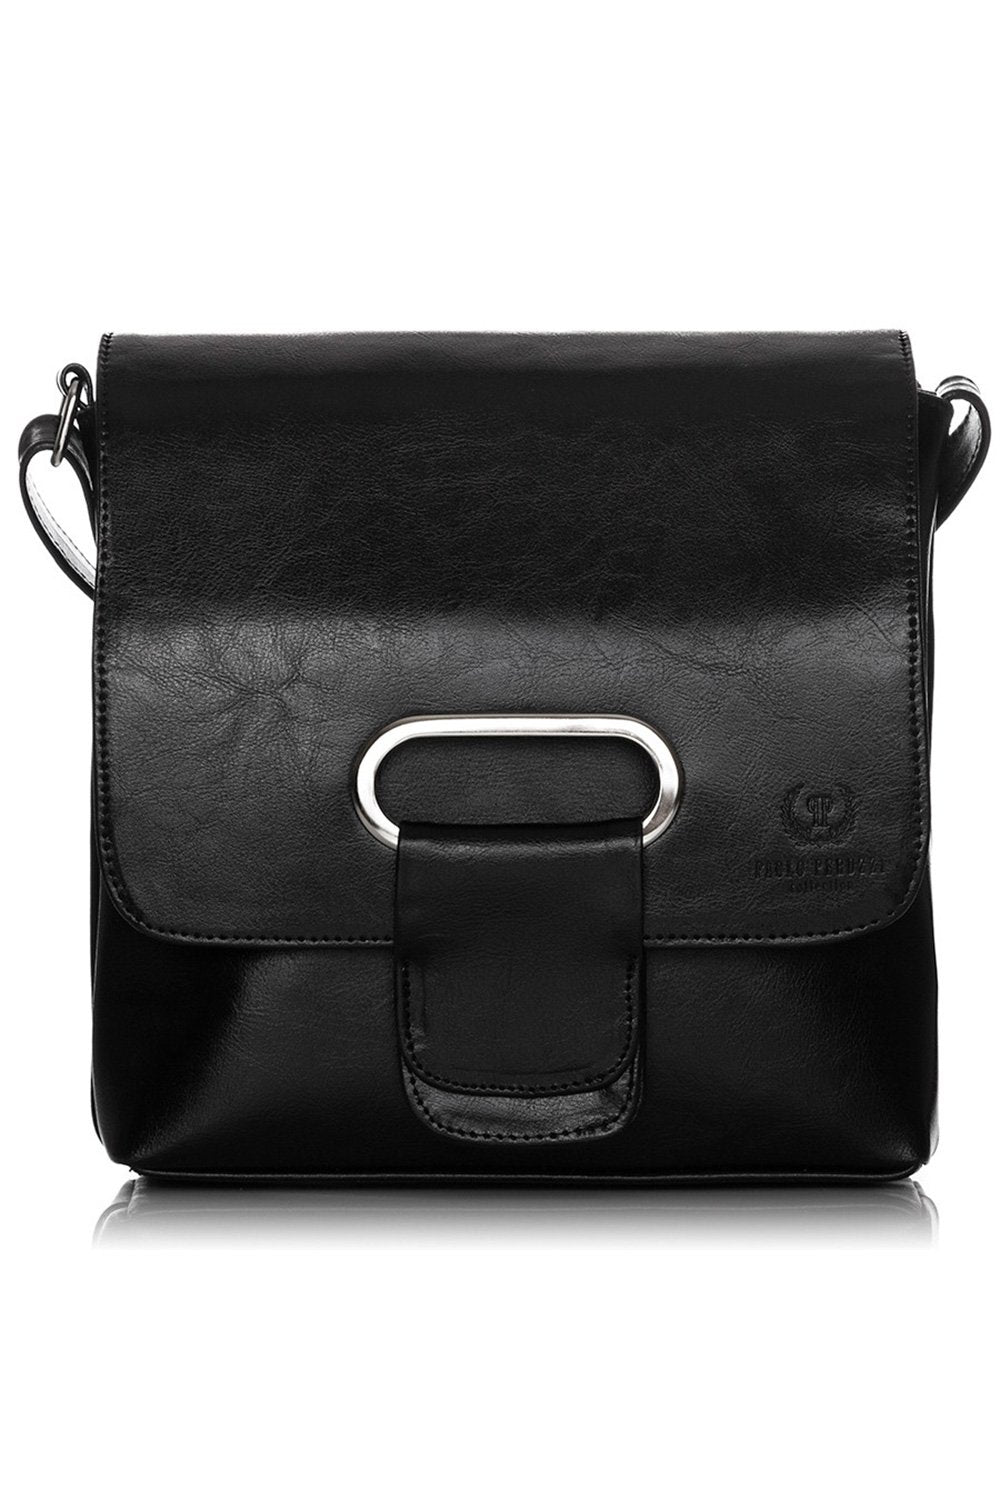 Natural leather bag model 173157 Hurtownia Galanter Posh Styles Apparel